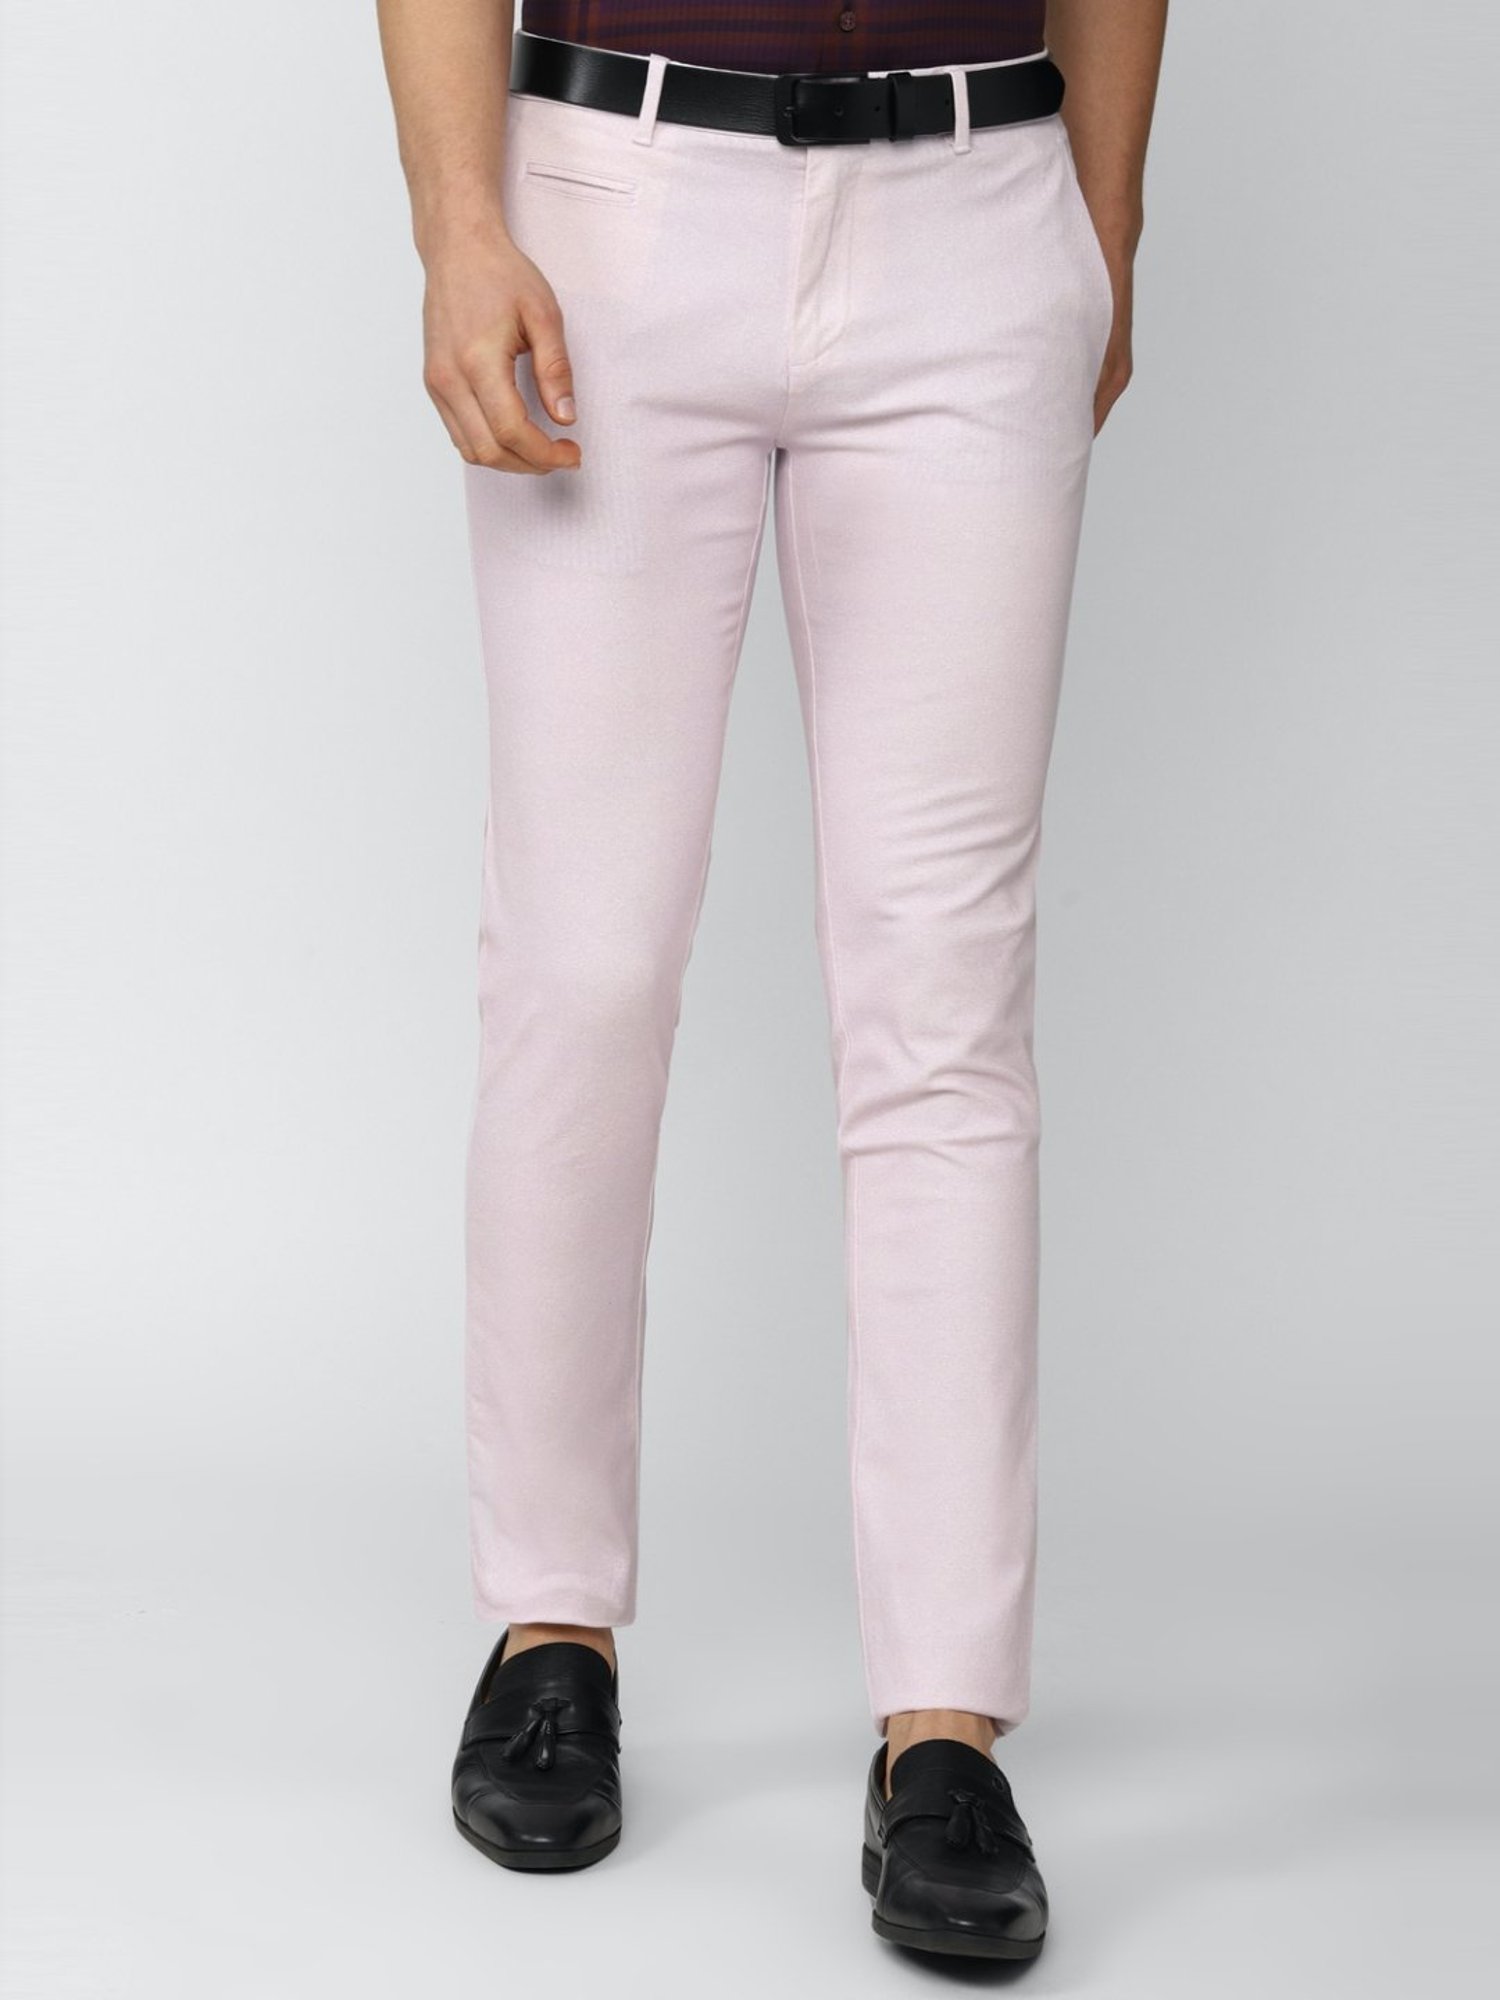 Buy Lavender Trousers  Pants for Men by John Pride Online  Ajiocom